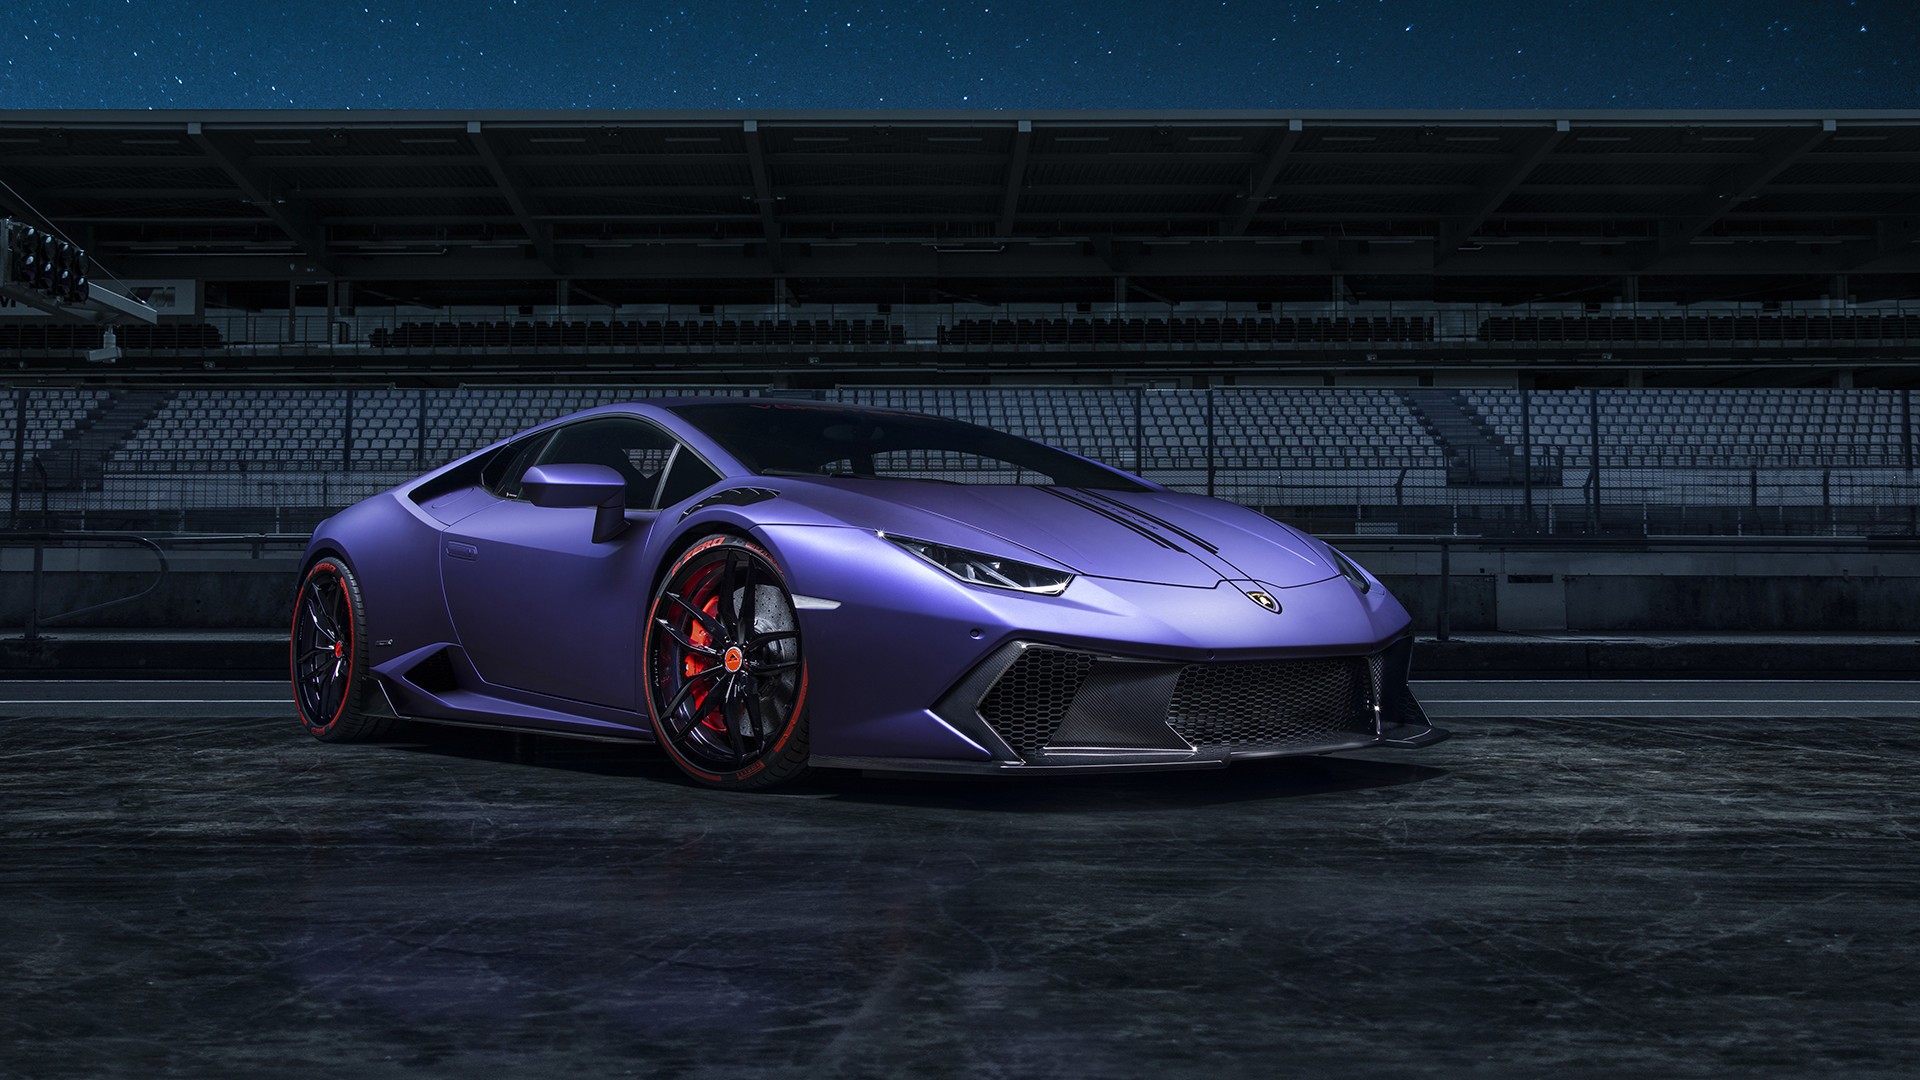 Lamborghini Huracan HD Wallpaper | Background Image | 1920x1080 | ID